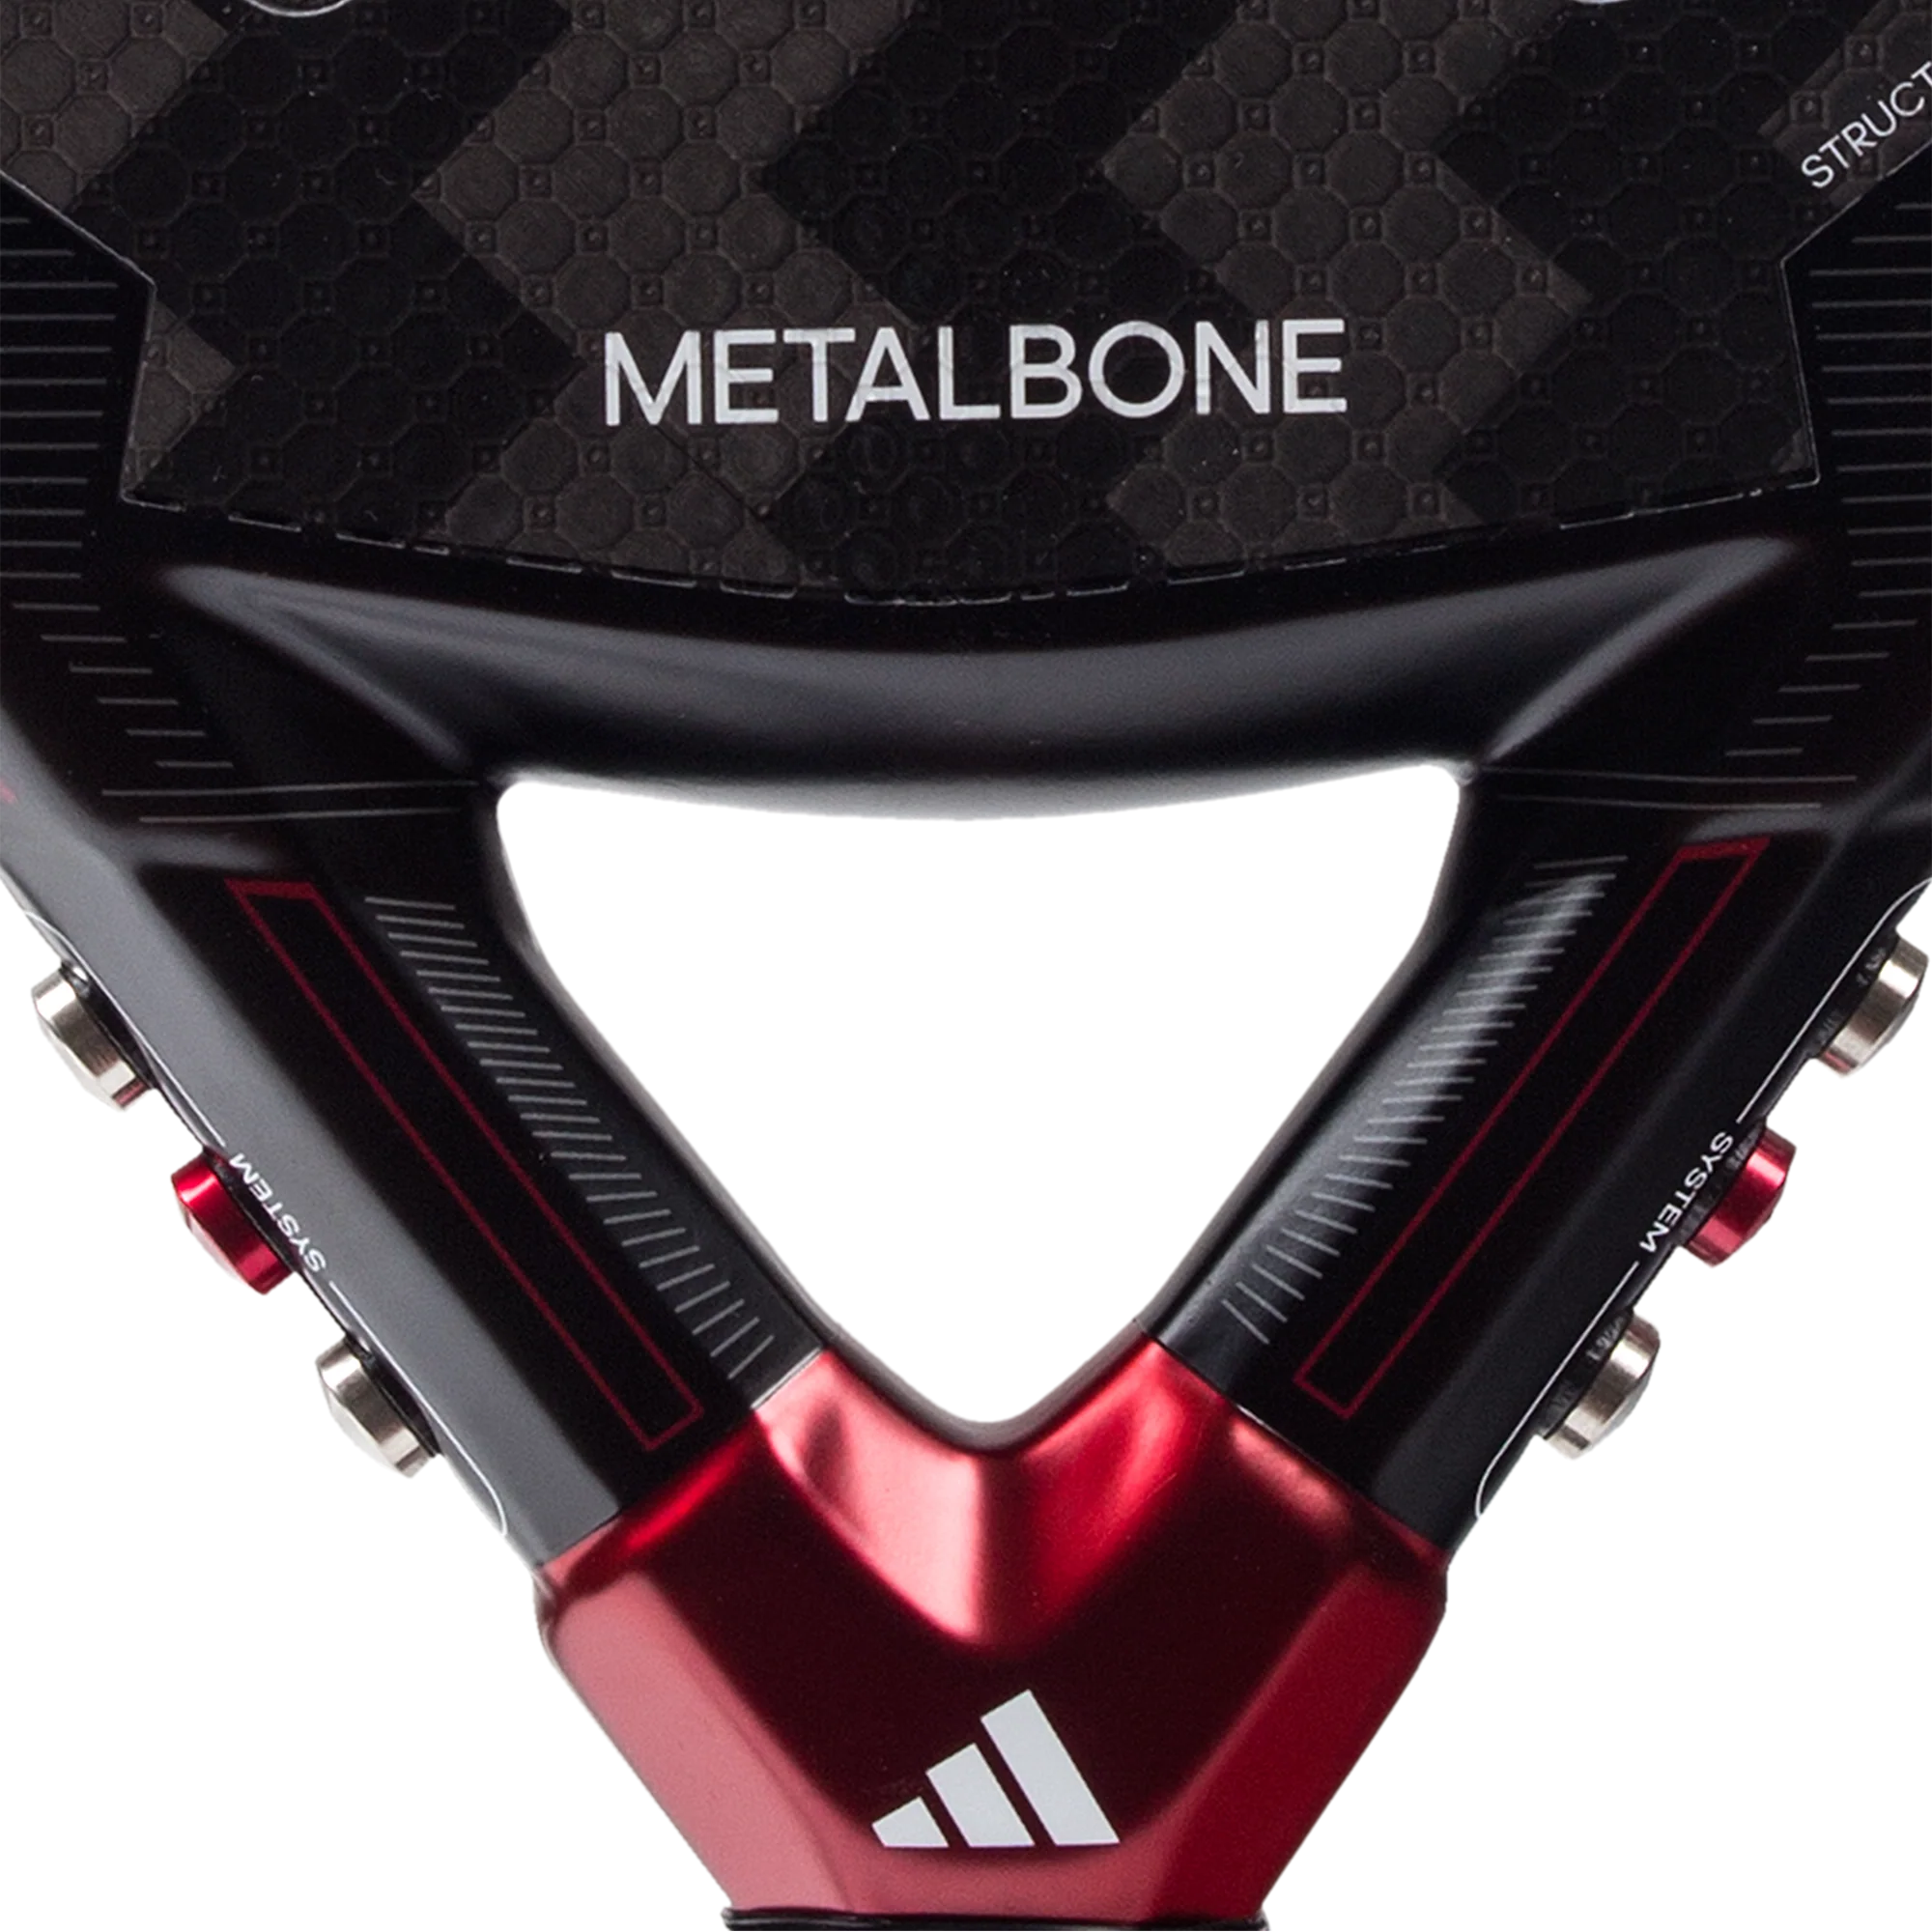 Adidas Metalbone 3.3 2024